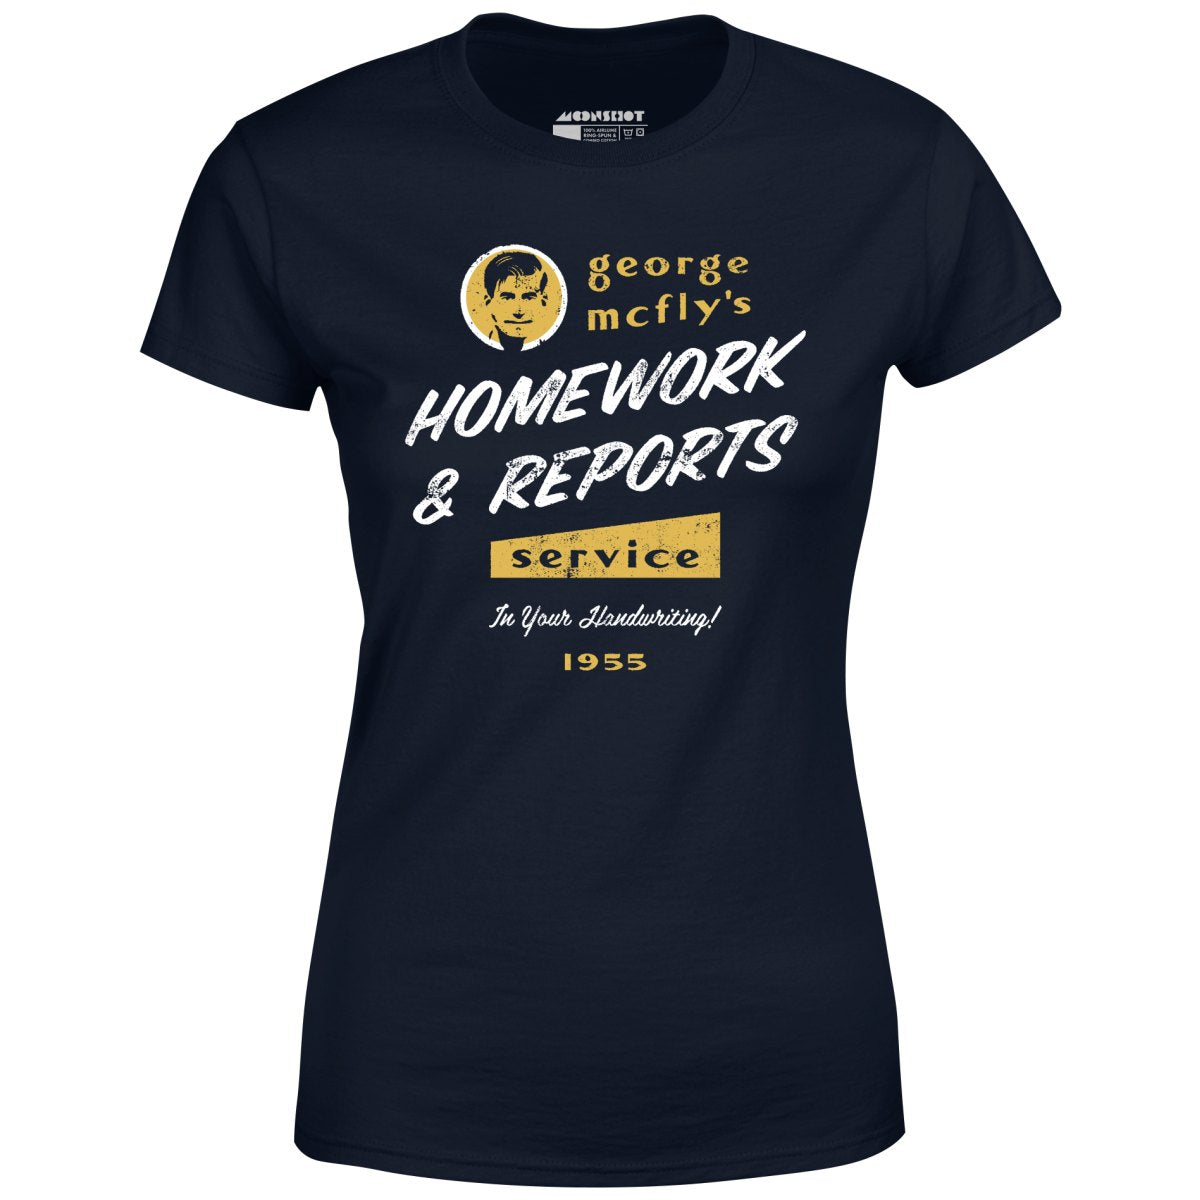 George McFly's Homework & Reports Service - Women's T-Shirt